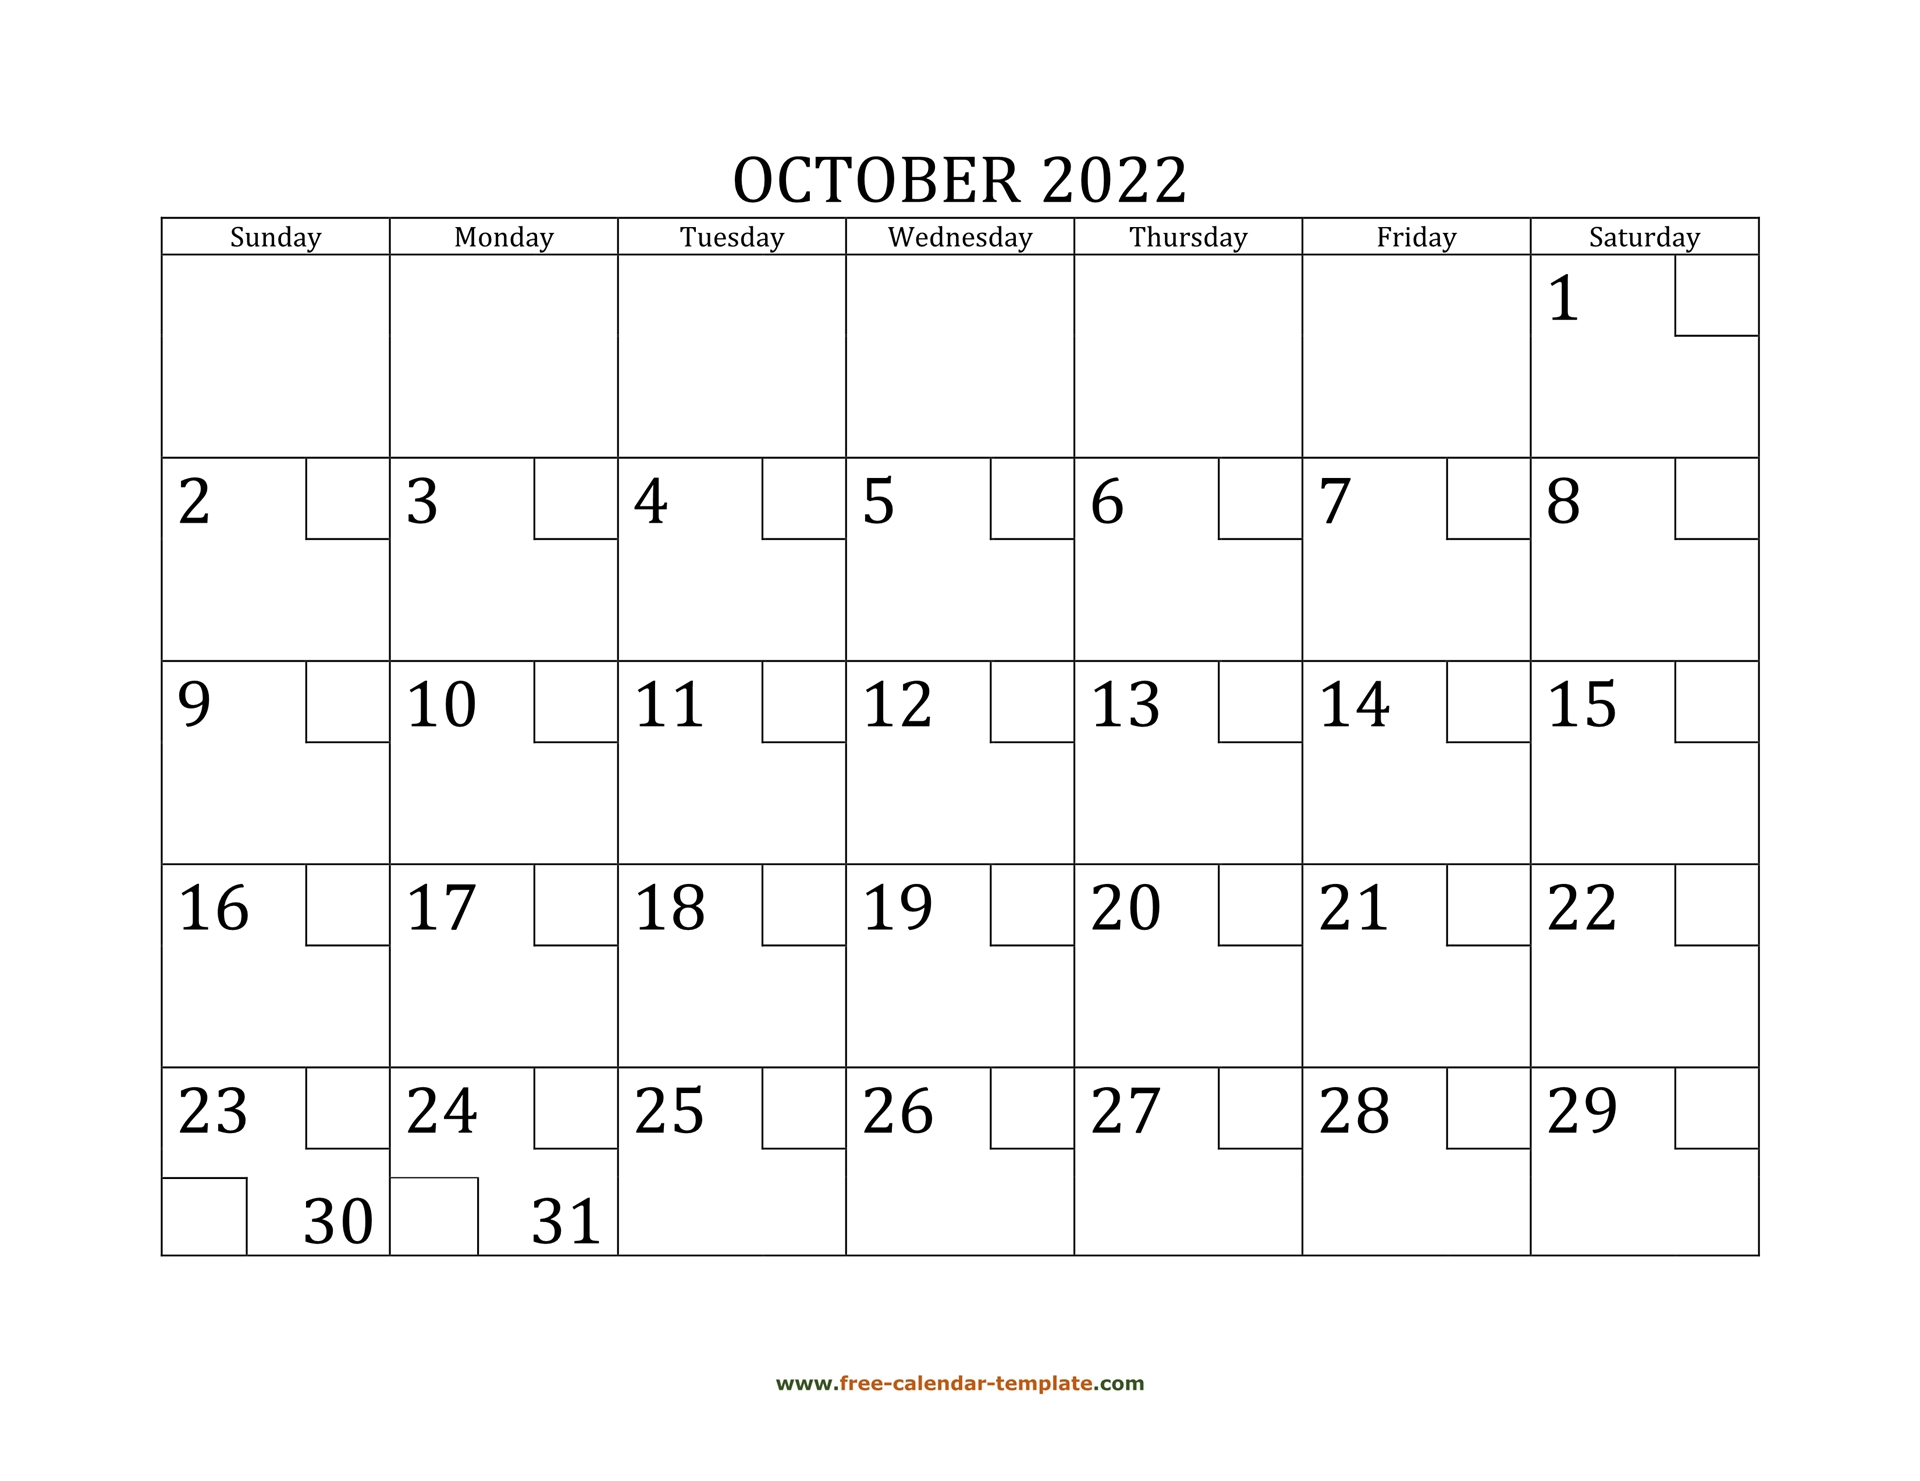 October 2022 Free Calendar Tempplate | Free-Calendar